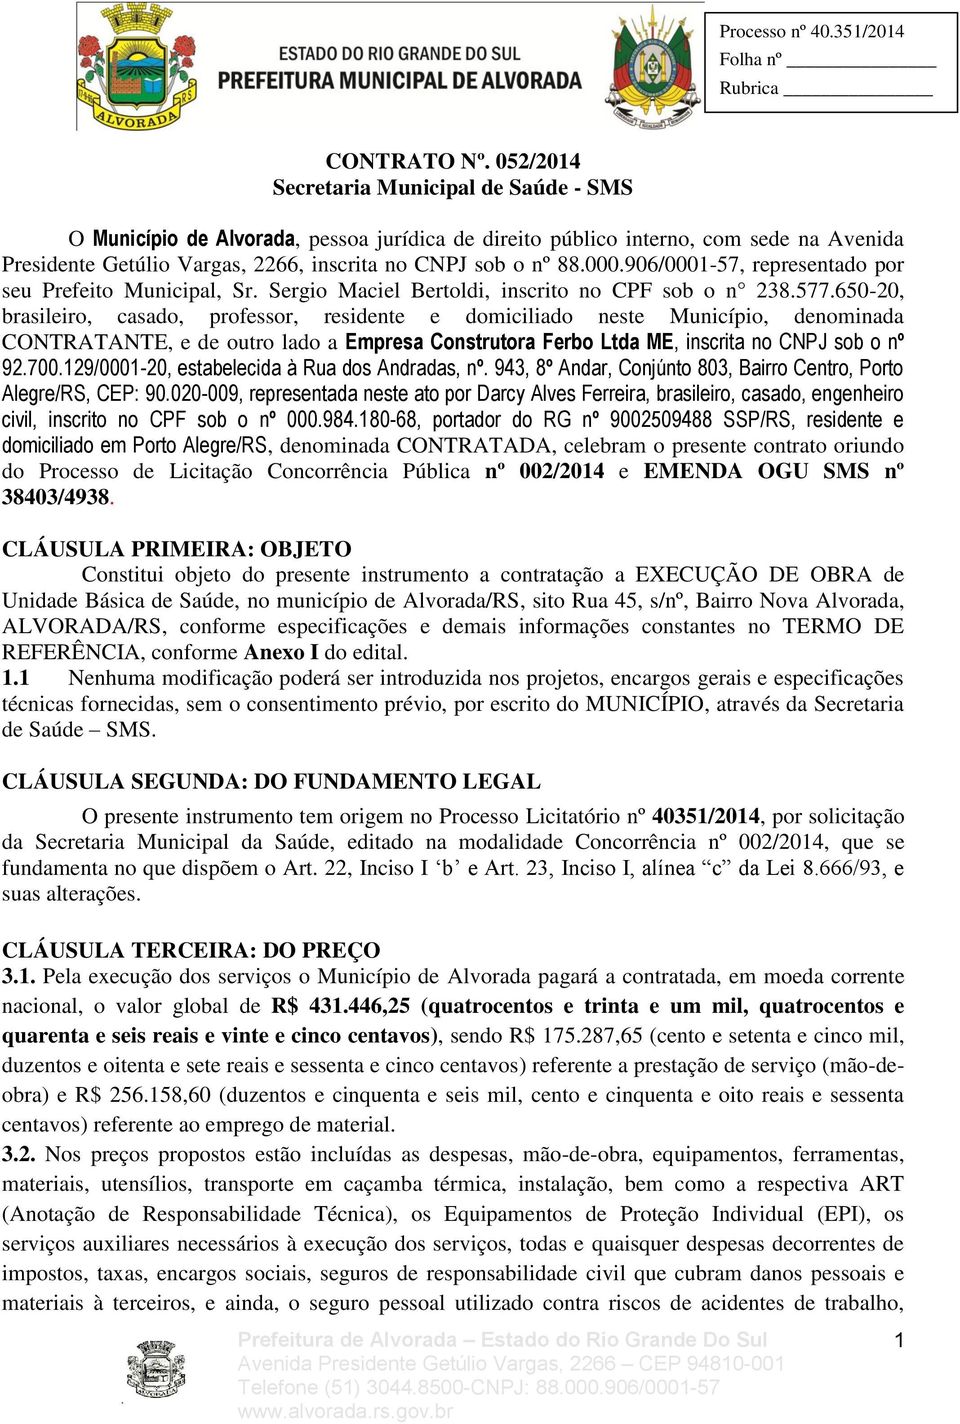 906/0001-57, representado por seu Prefeito Municipal, Sr. Sergio Maciel Bertoldi, inscrito no CPF sob o n 238.577.